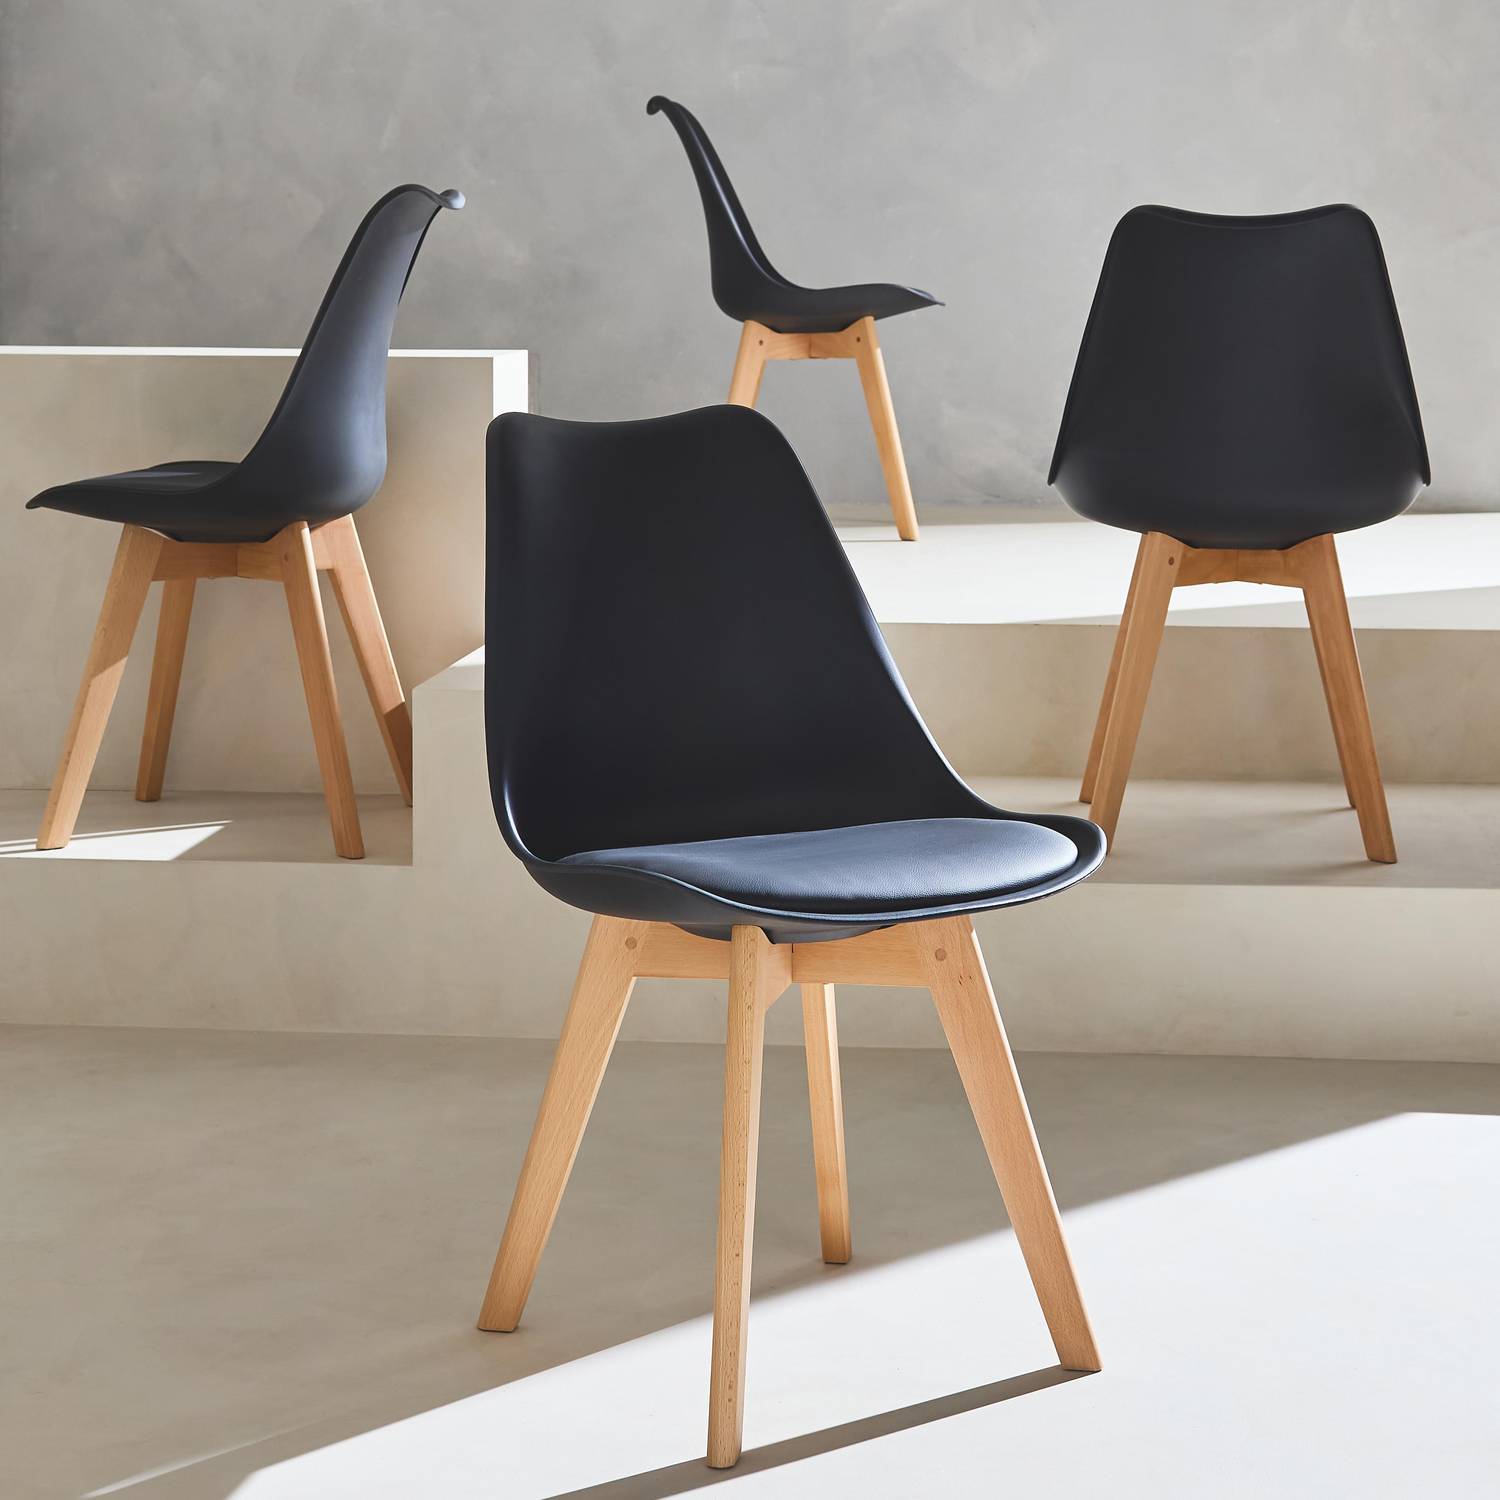 Set of 4 Scandinavian chairs, beechwood legs, 1-seater chair, black Photo2